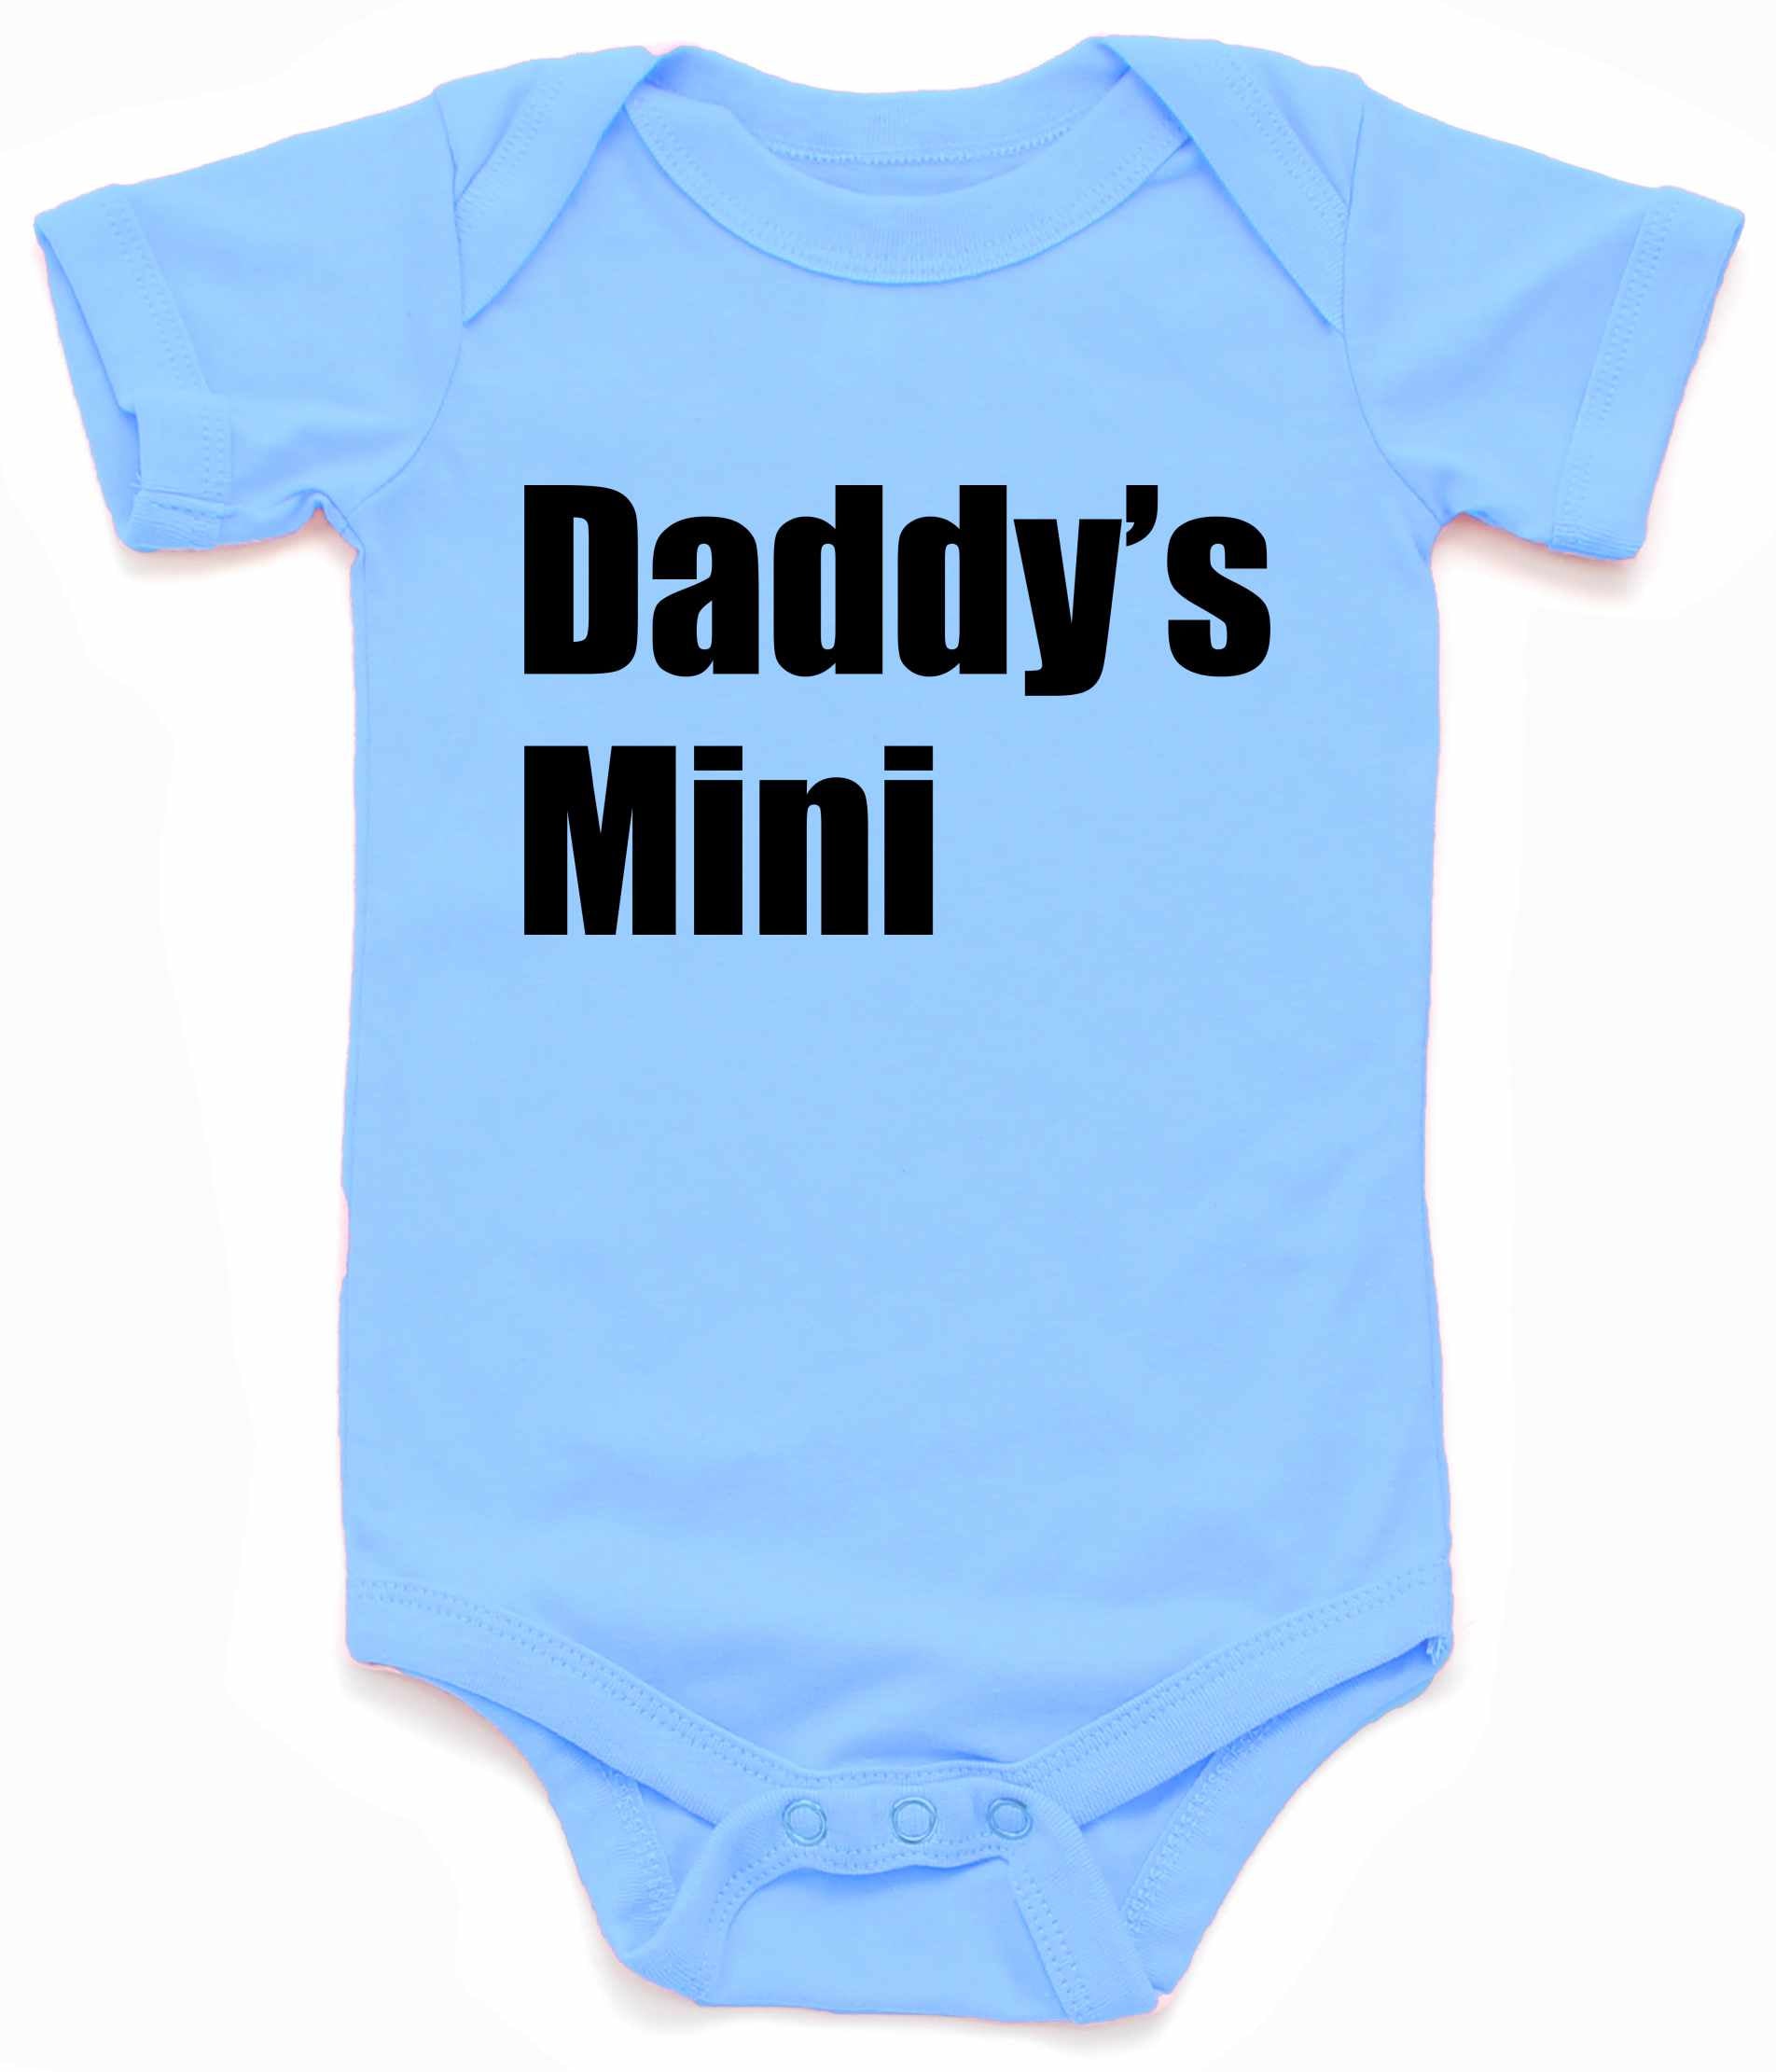 Daddy's Mini Infant BodySuit - Light Blue / NewBorn - Light Blue / 6 Month - Light Blue / 12 Month - Light Blue / 18 Month - Light Blue / 24 Month